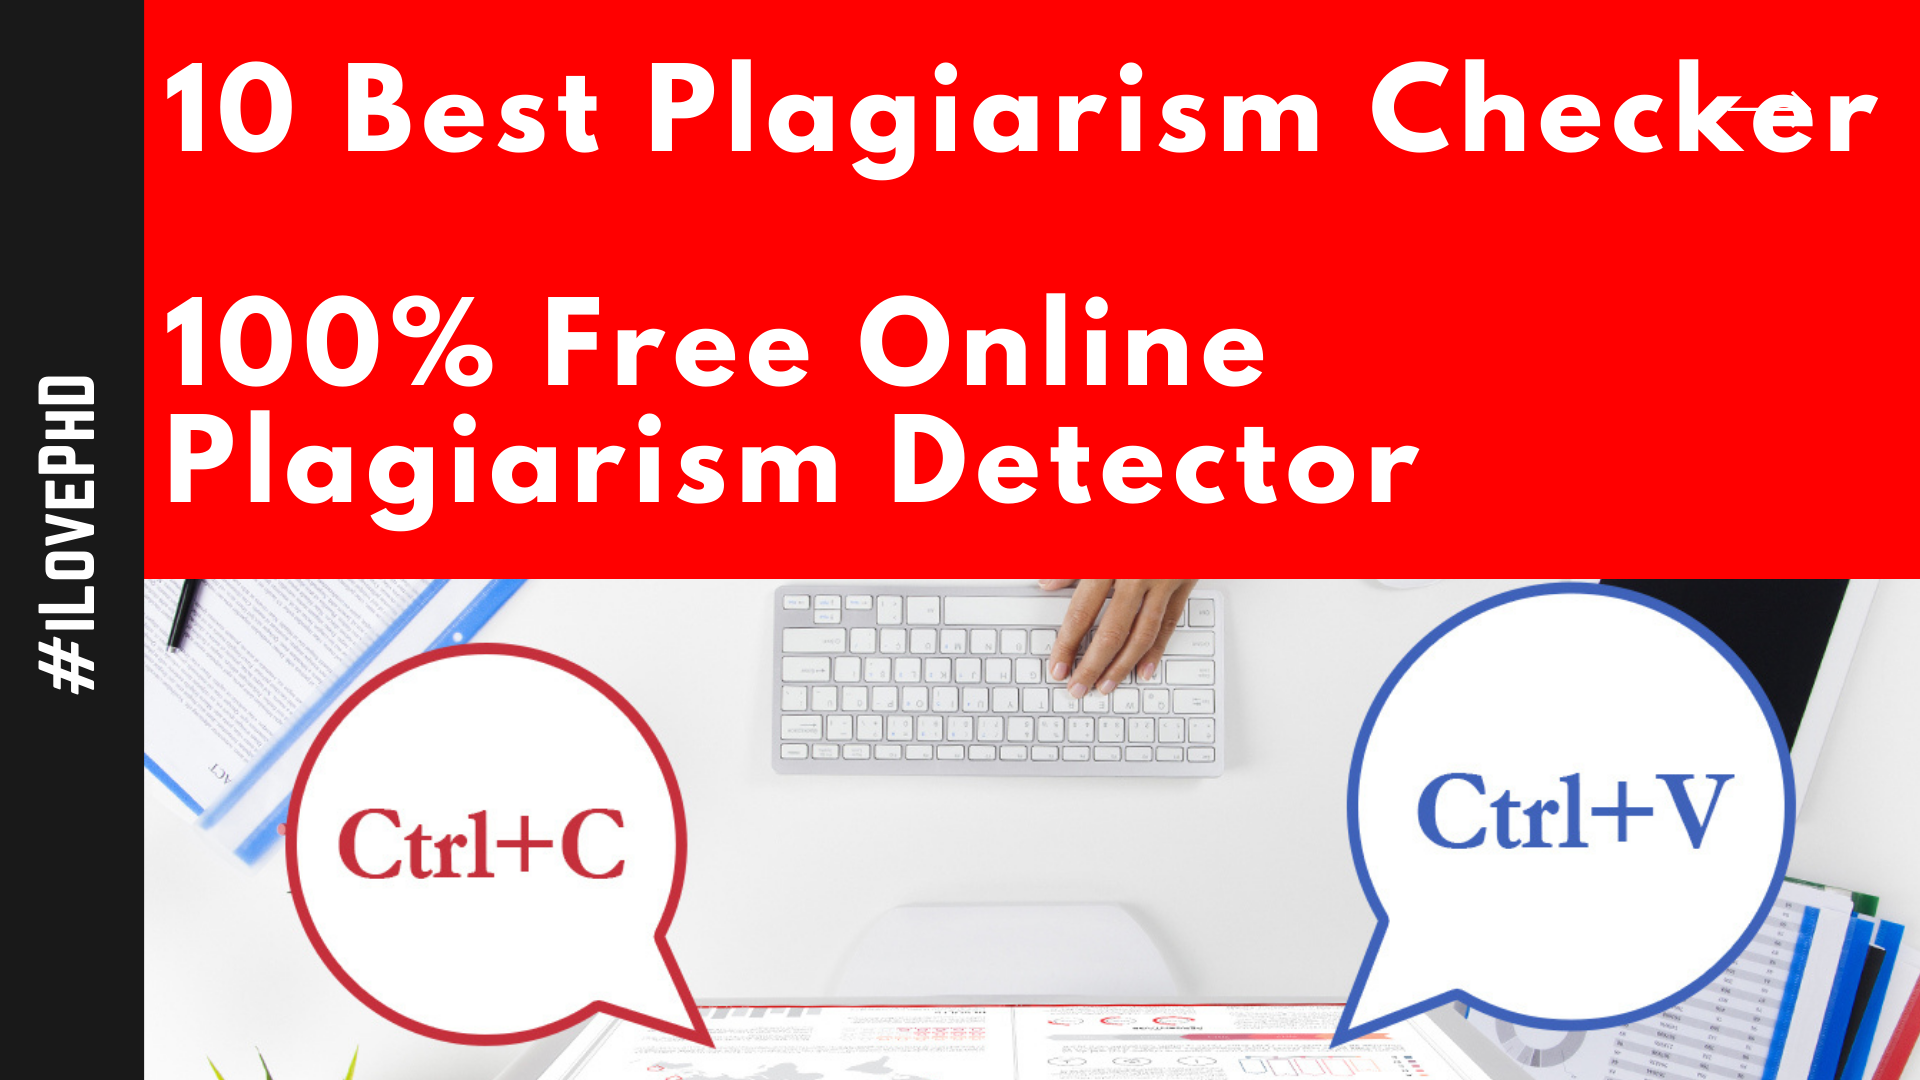 image plagiarism checker online